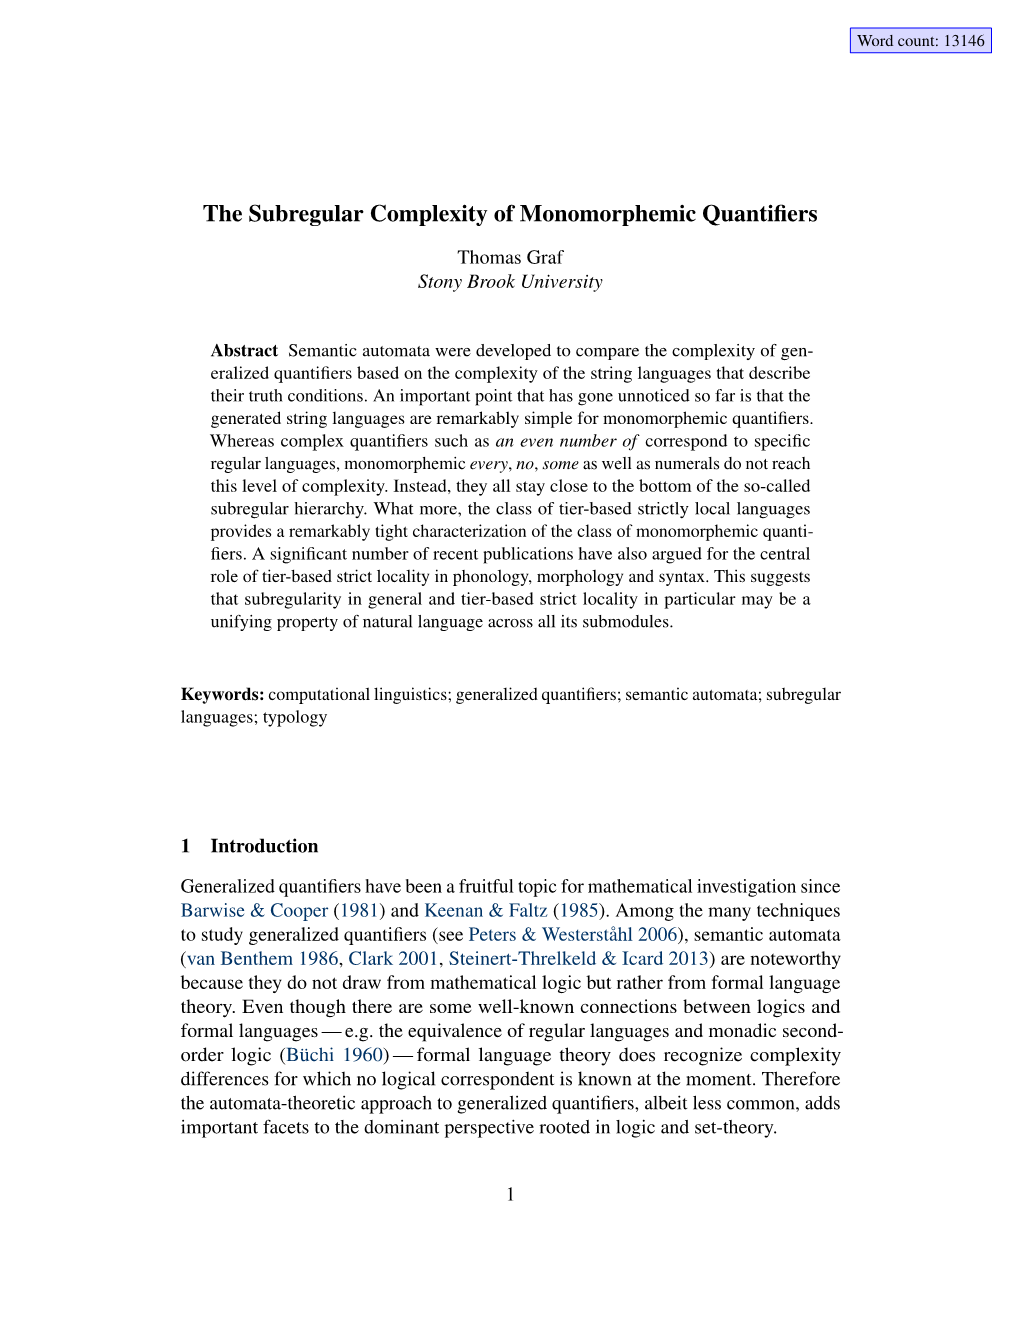 The Subregular Complexity of Monomorphemic Quantifiers